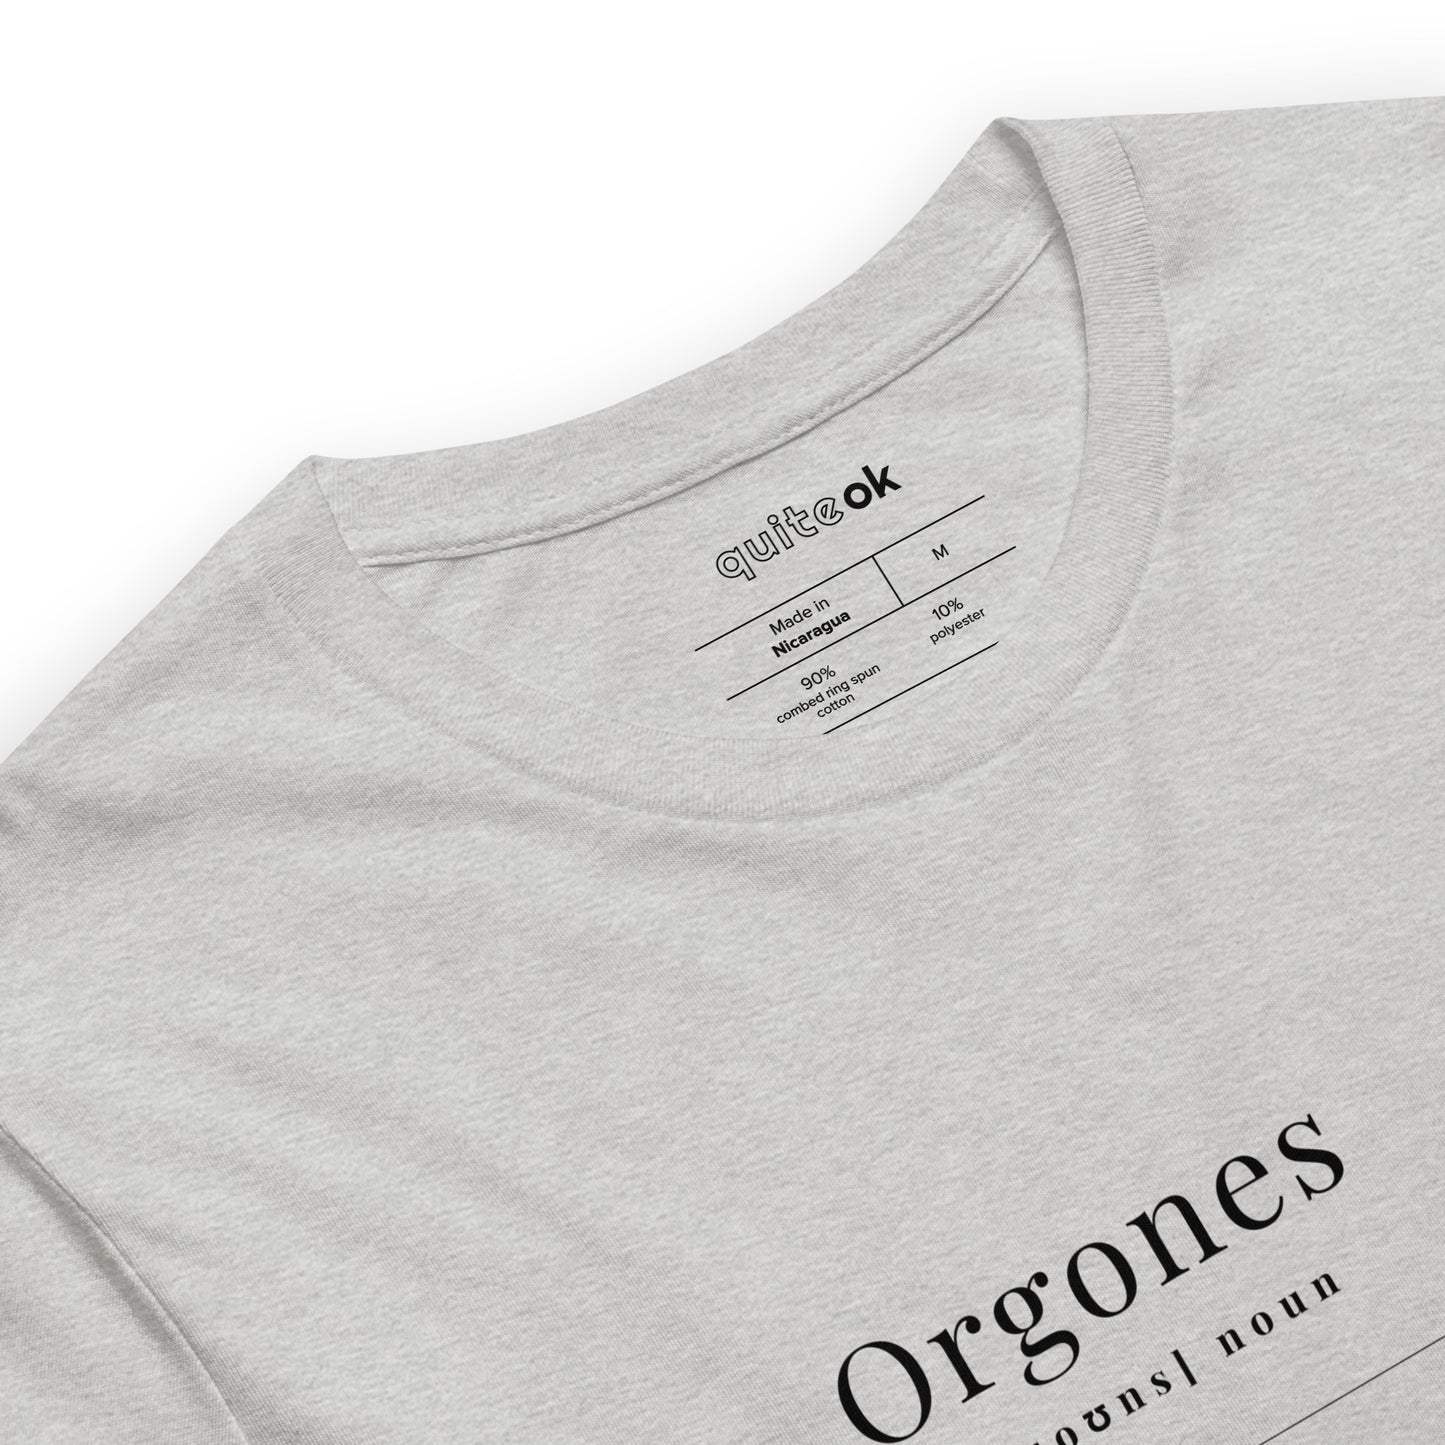 Orgones Comedy Definition T-Shirt